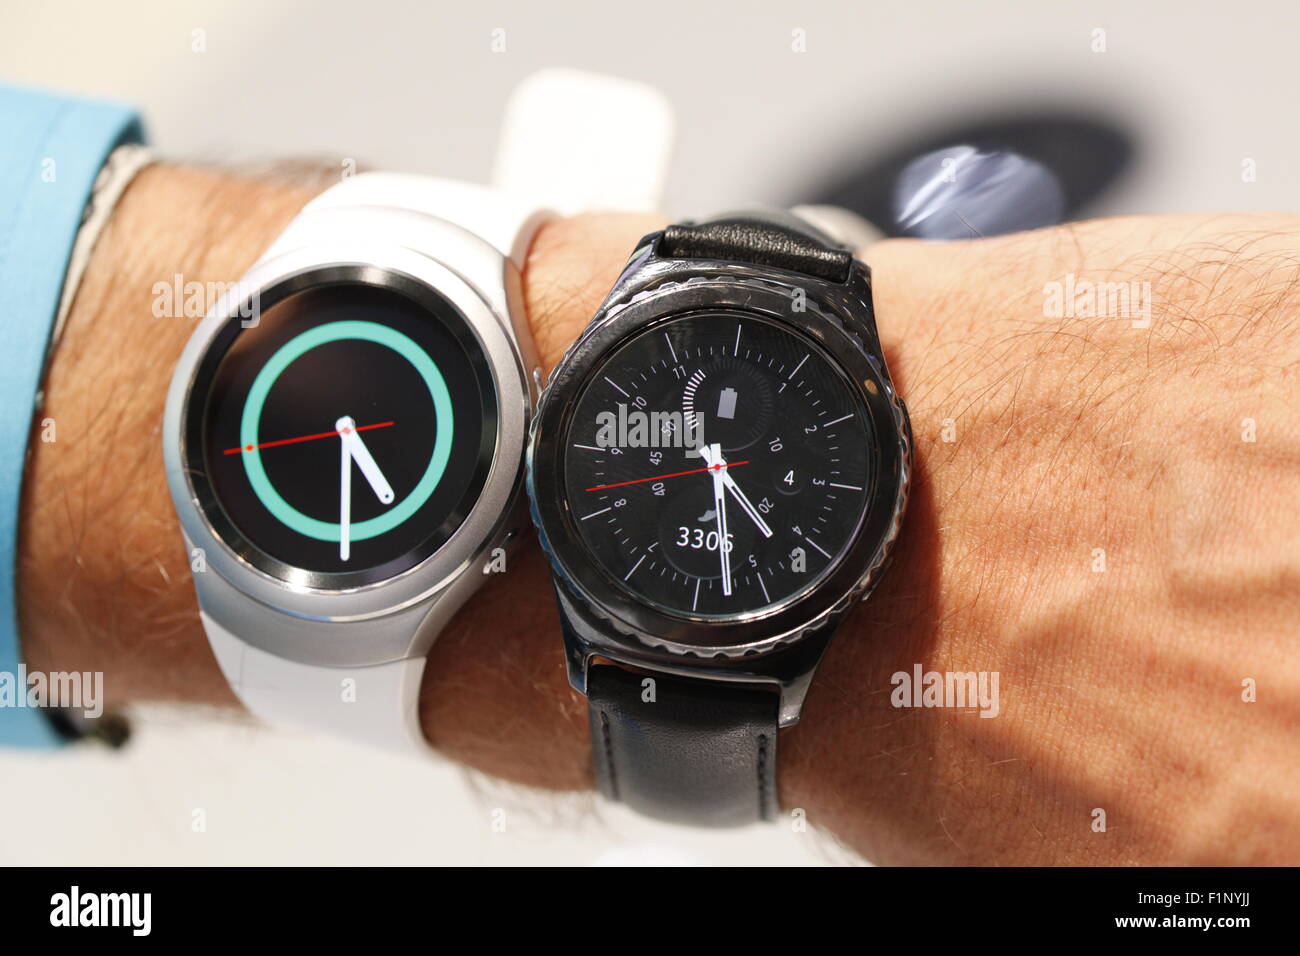 IFA 2015, ingranaggio Samsung S2 Smartwatch Foto Stock